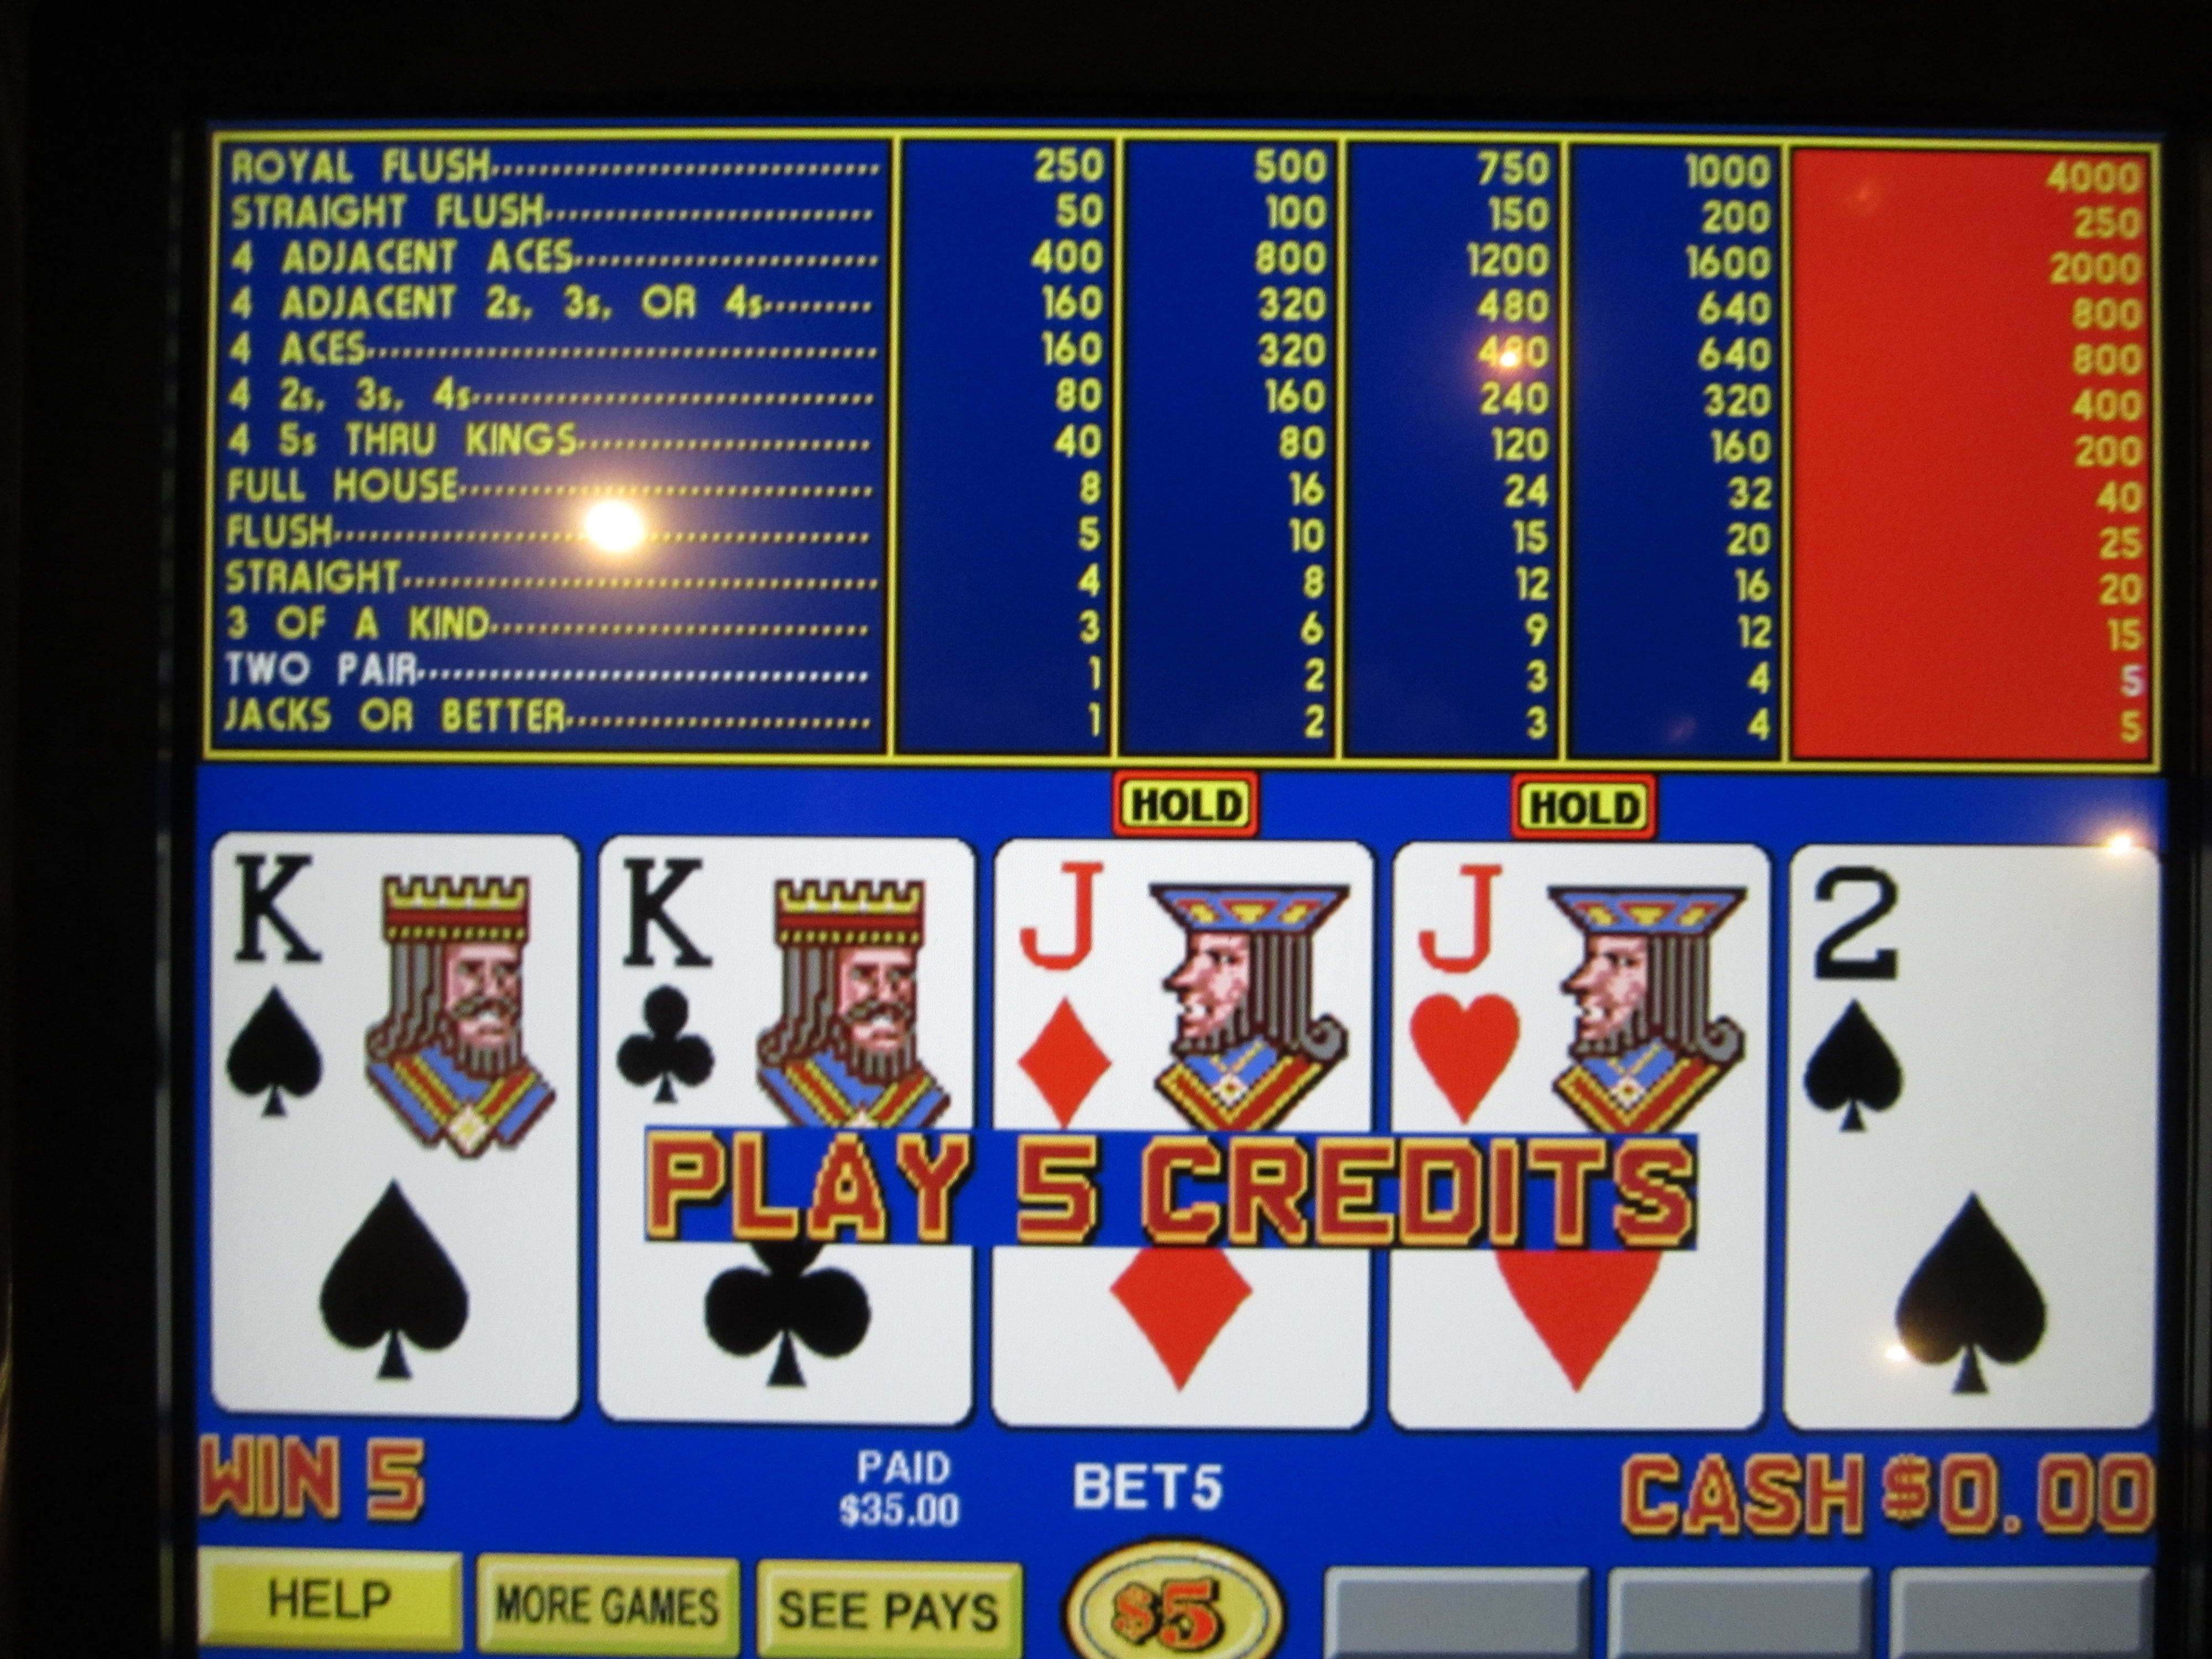 Double Double Bonus Poker Pay Tables